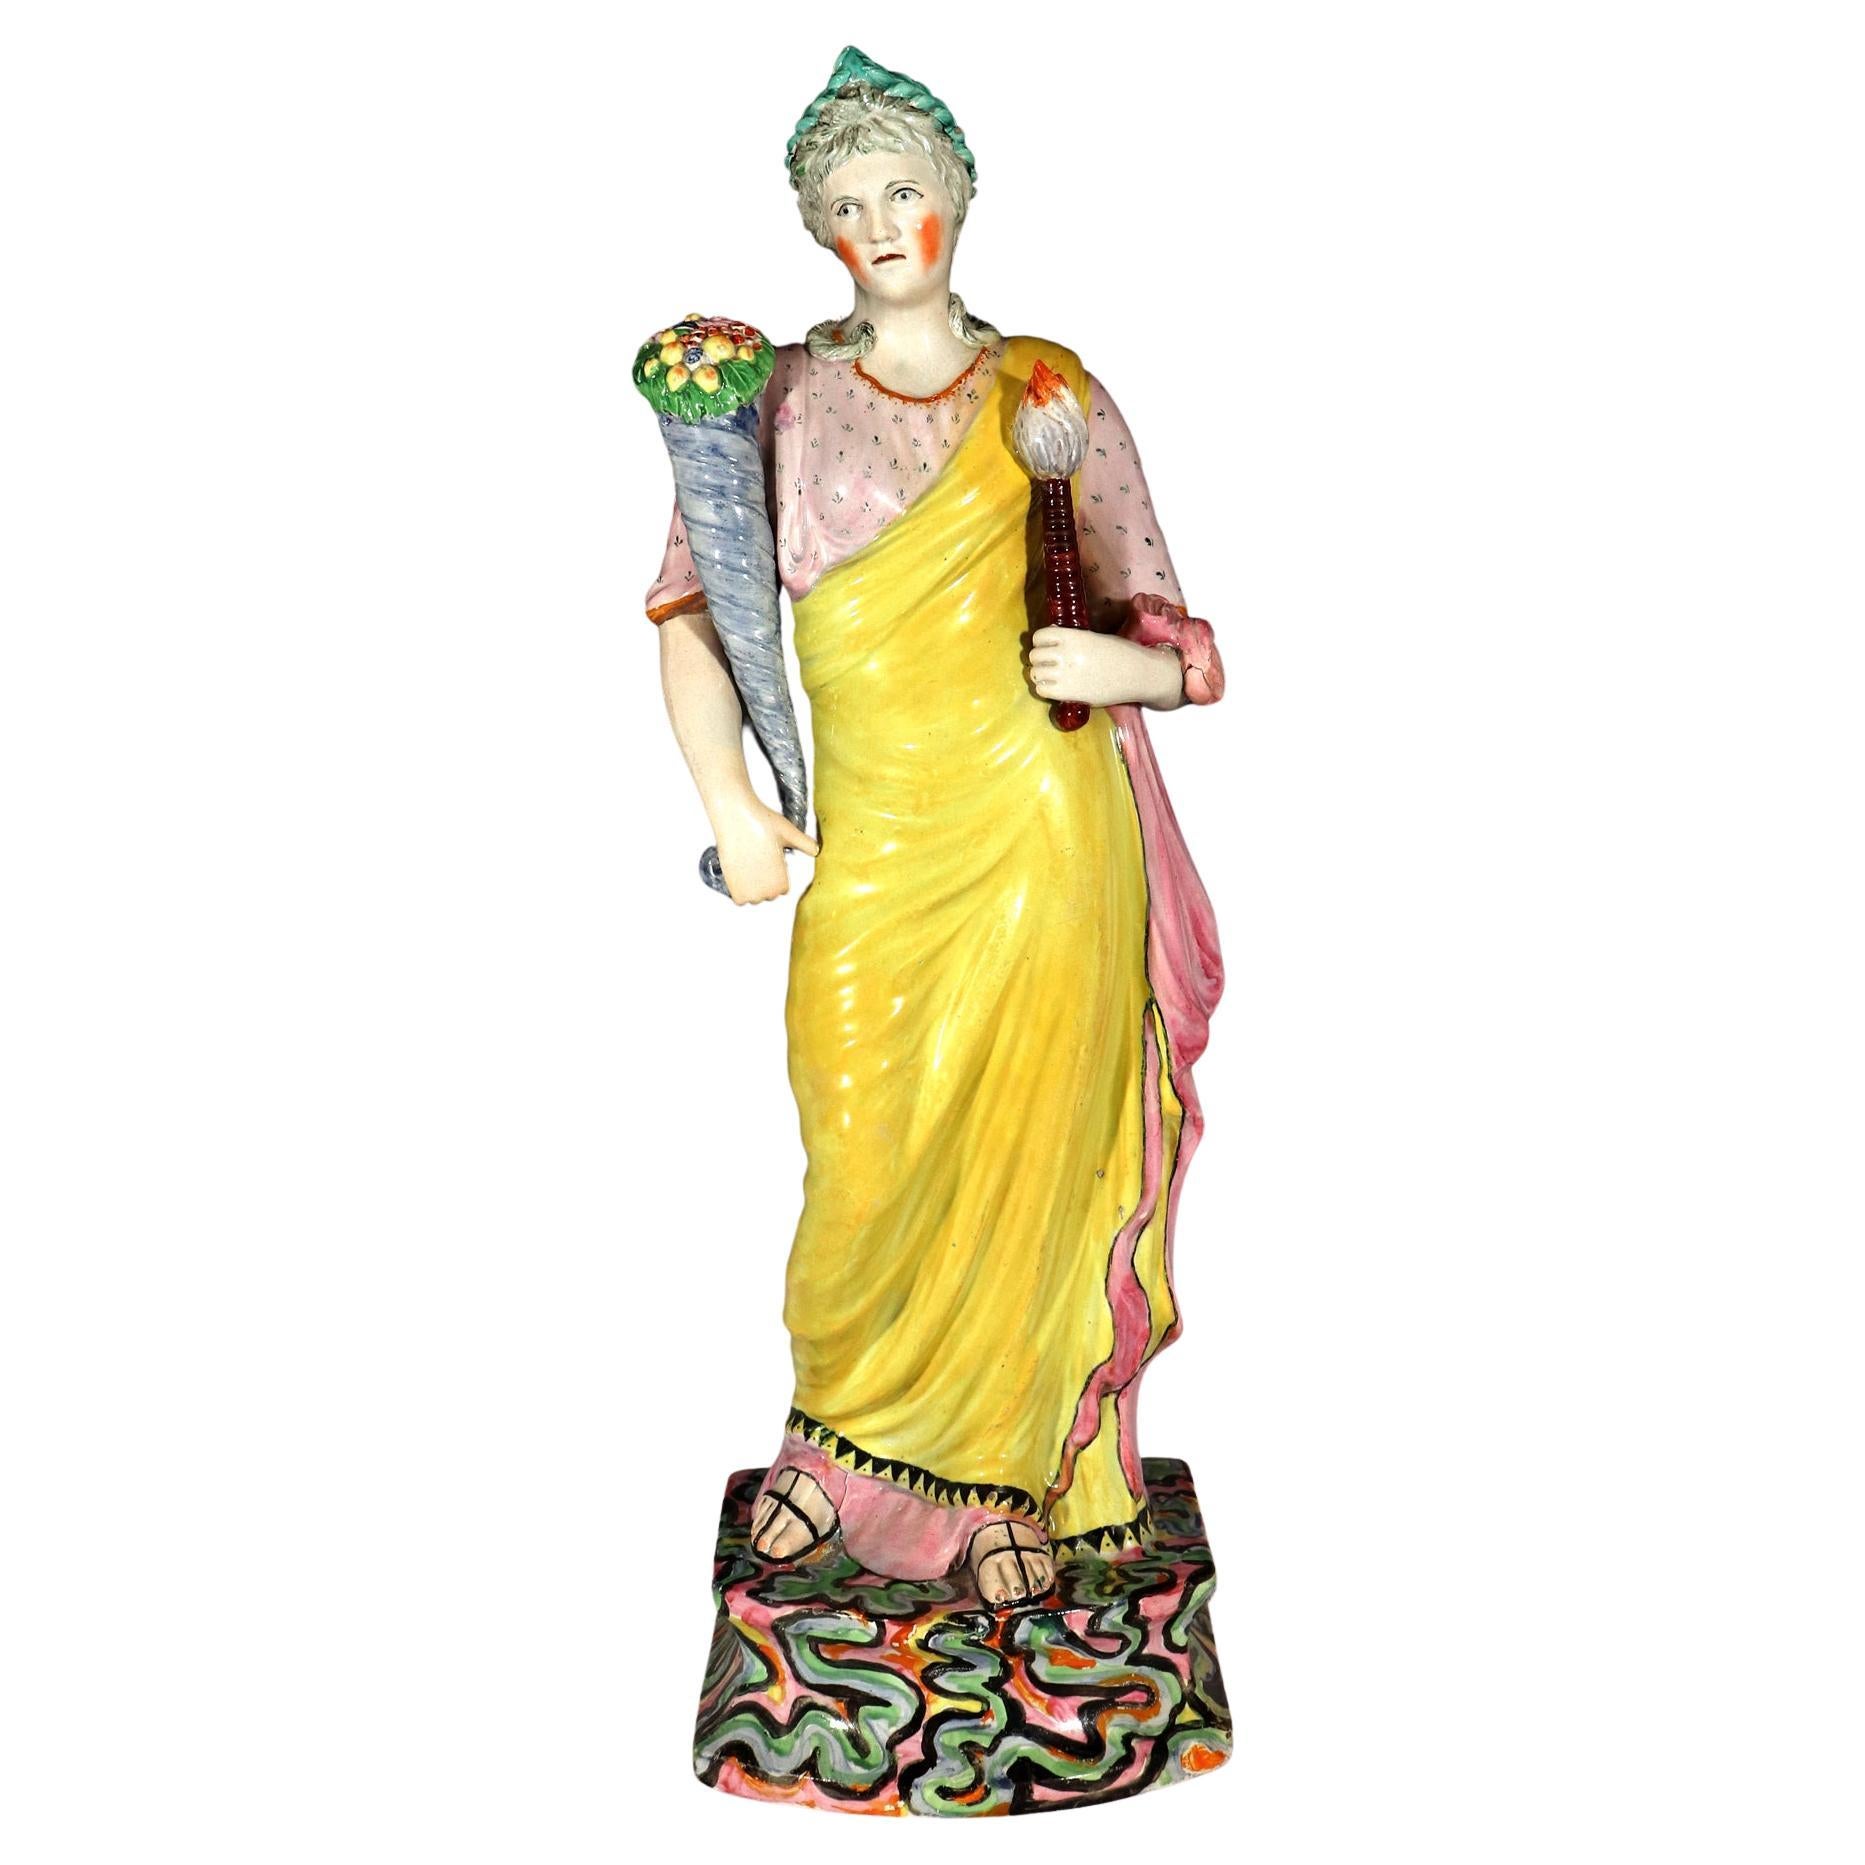  Grande figurine de céramique Staffordshire en céramique perlée  ou abondance